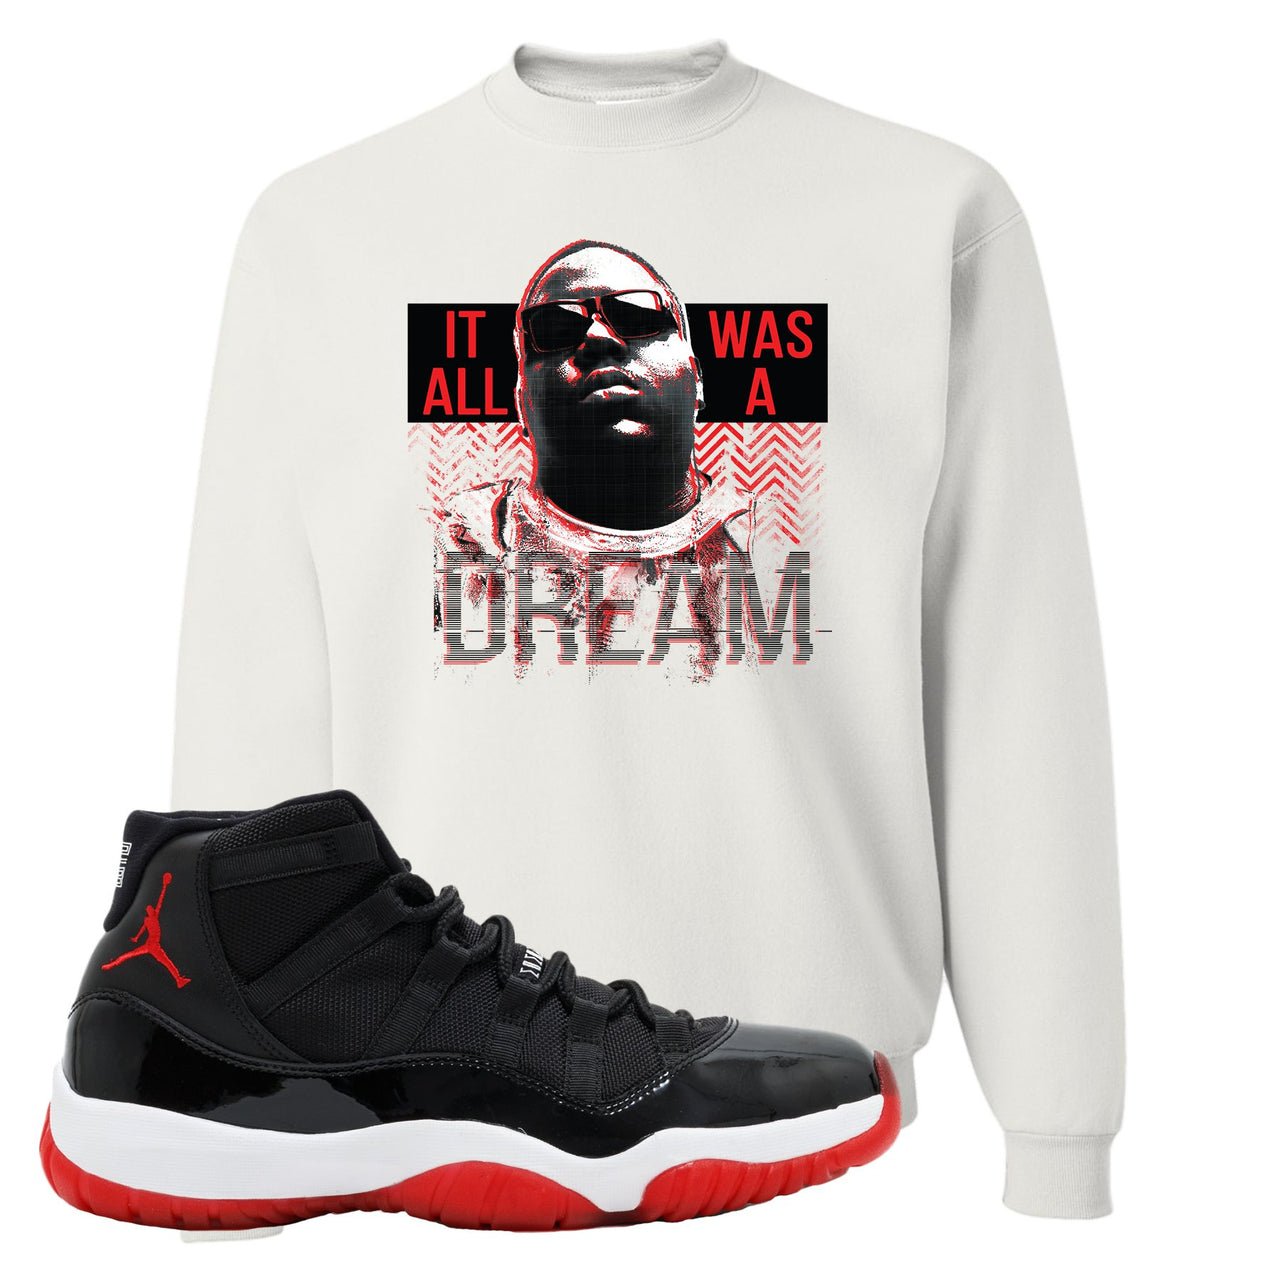 Jordan 11 Bred It Was All A Dream White Sneaker Hook Up Crewneck Sweatshirt